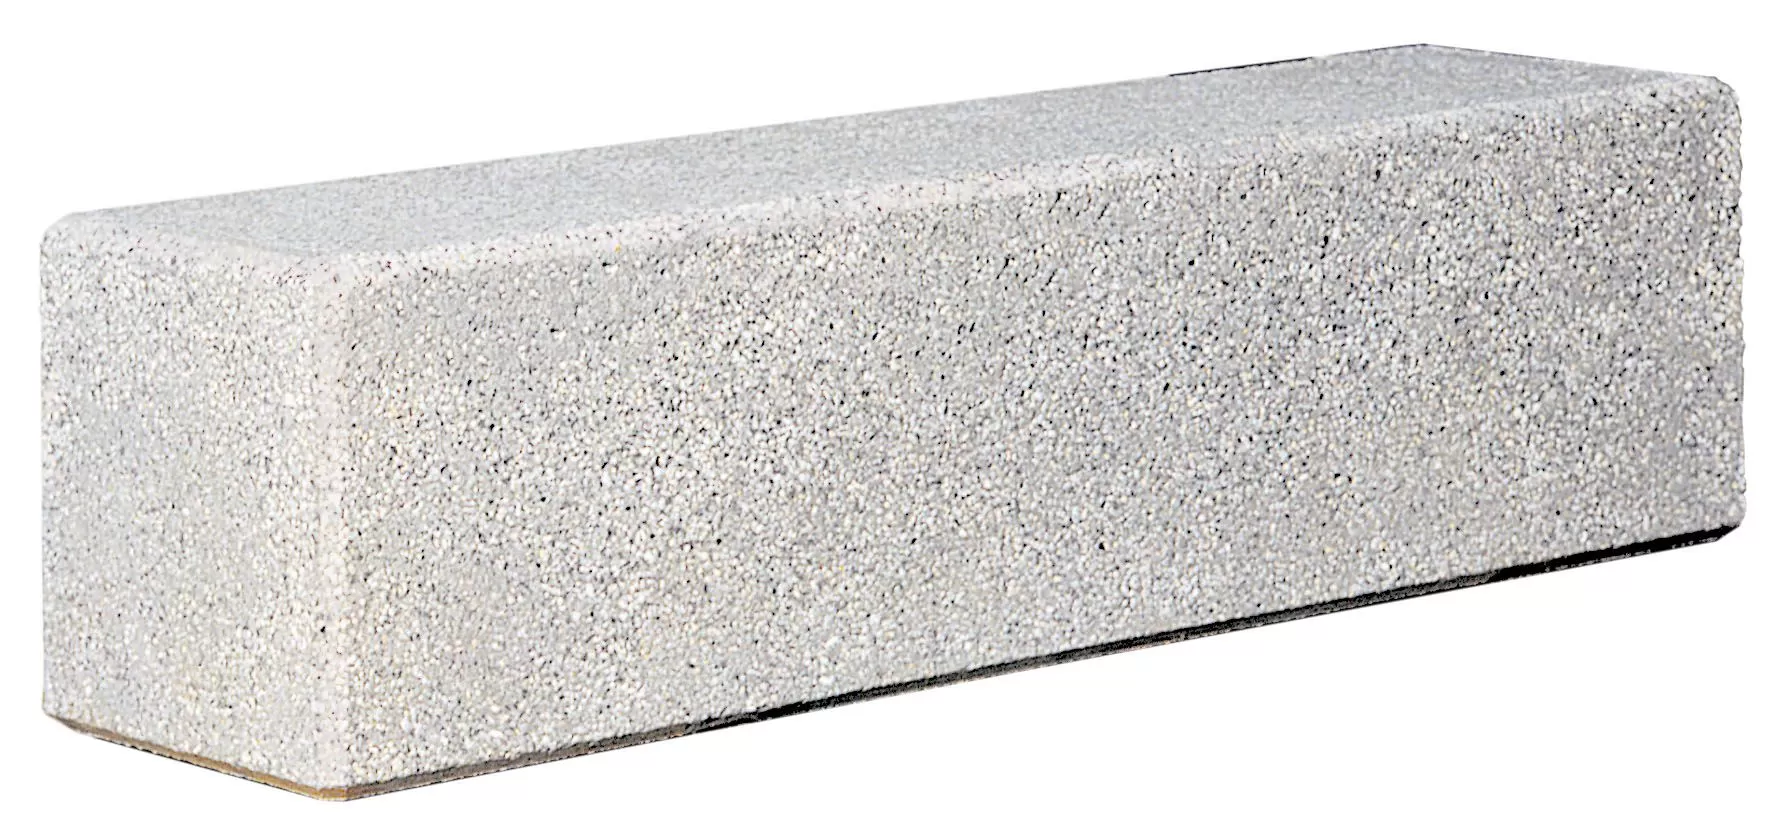 Protective concrete bollard